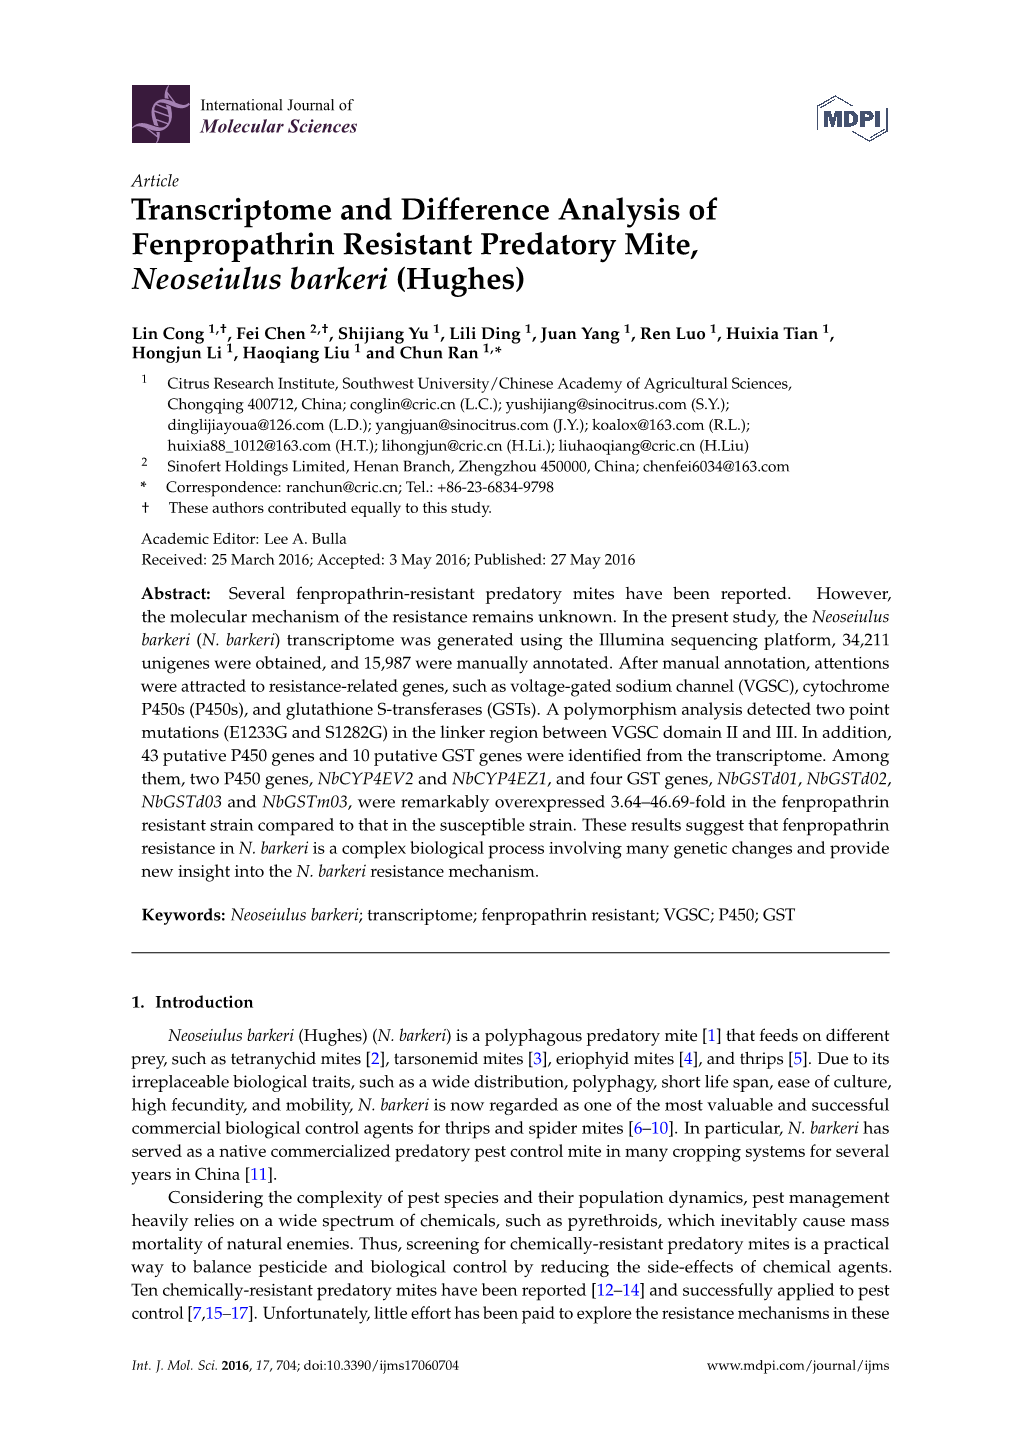 Transcriptome and Difference Analysis of Fenpropathrin Resistant Predatory Mite, Neoseiulus Barkeri (Hughes)